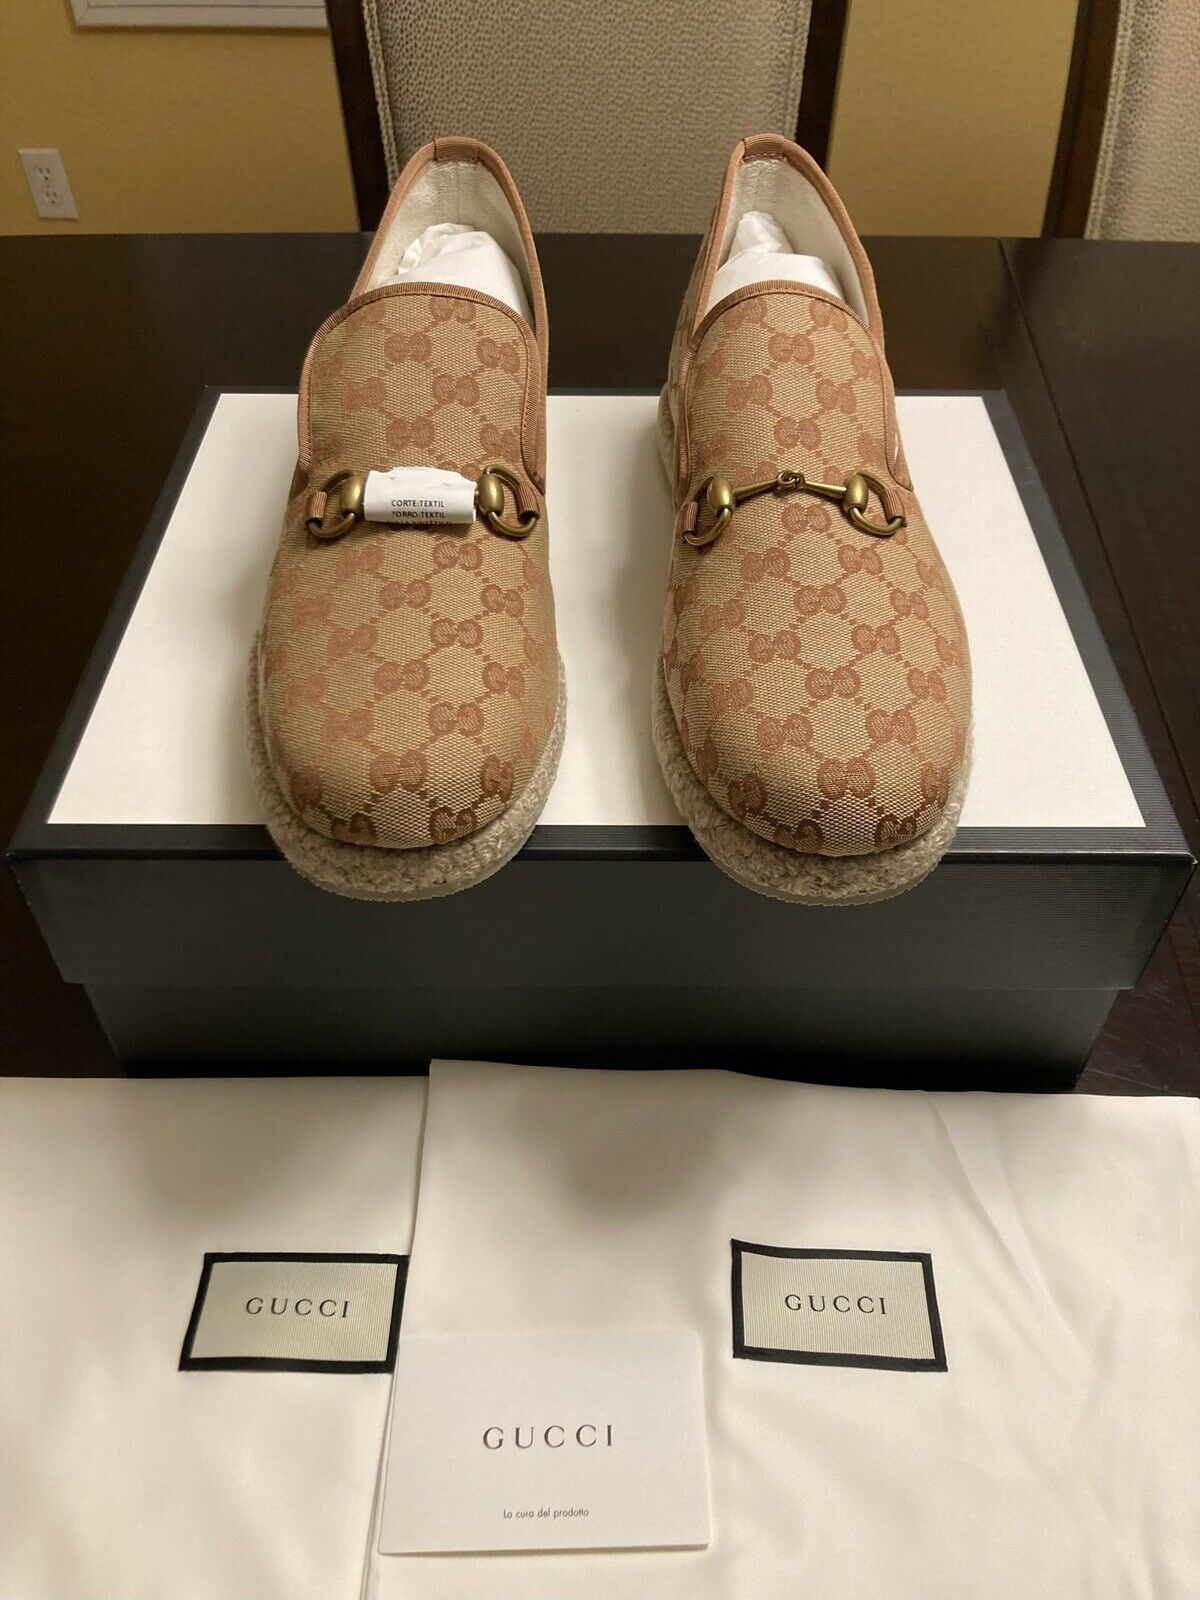 New Authentic Gucci GG Logo Espadrilles Shoes Size US 11.5 / UK 11